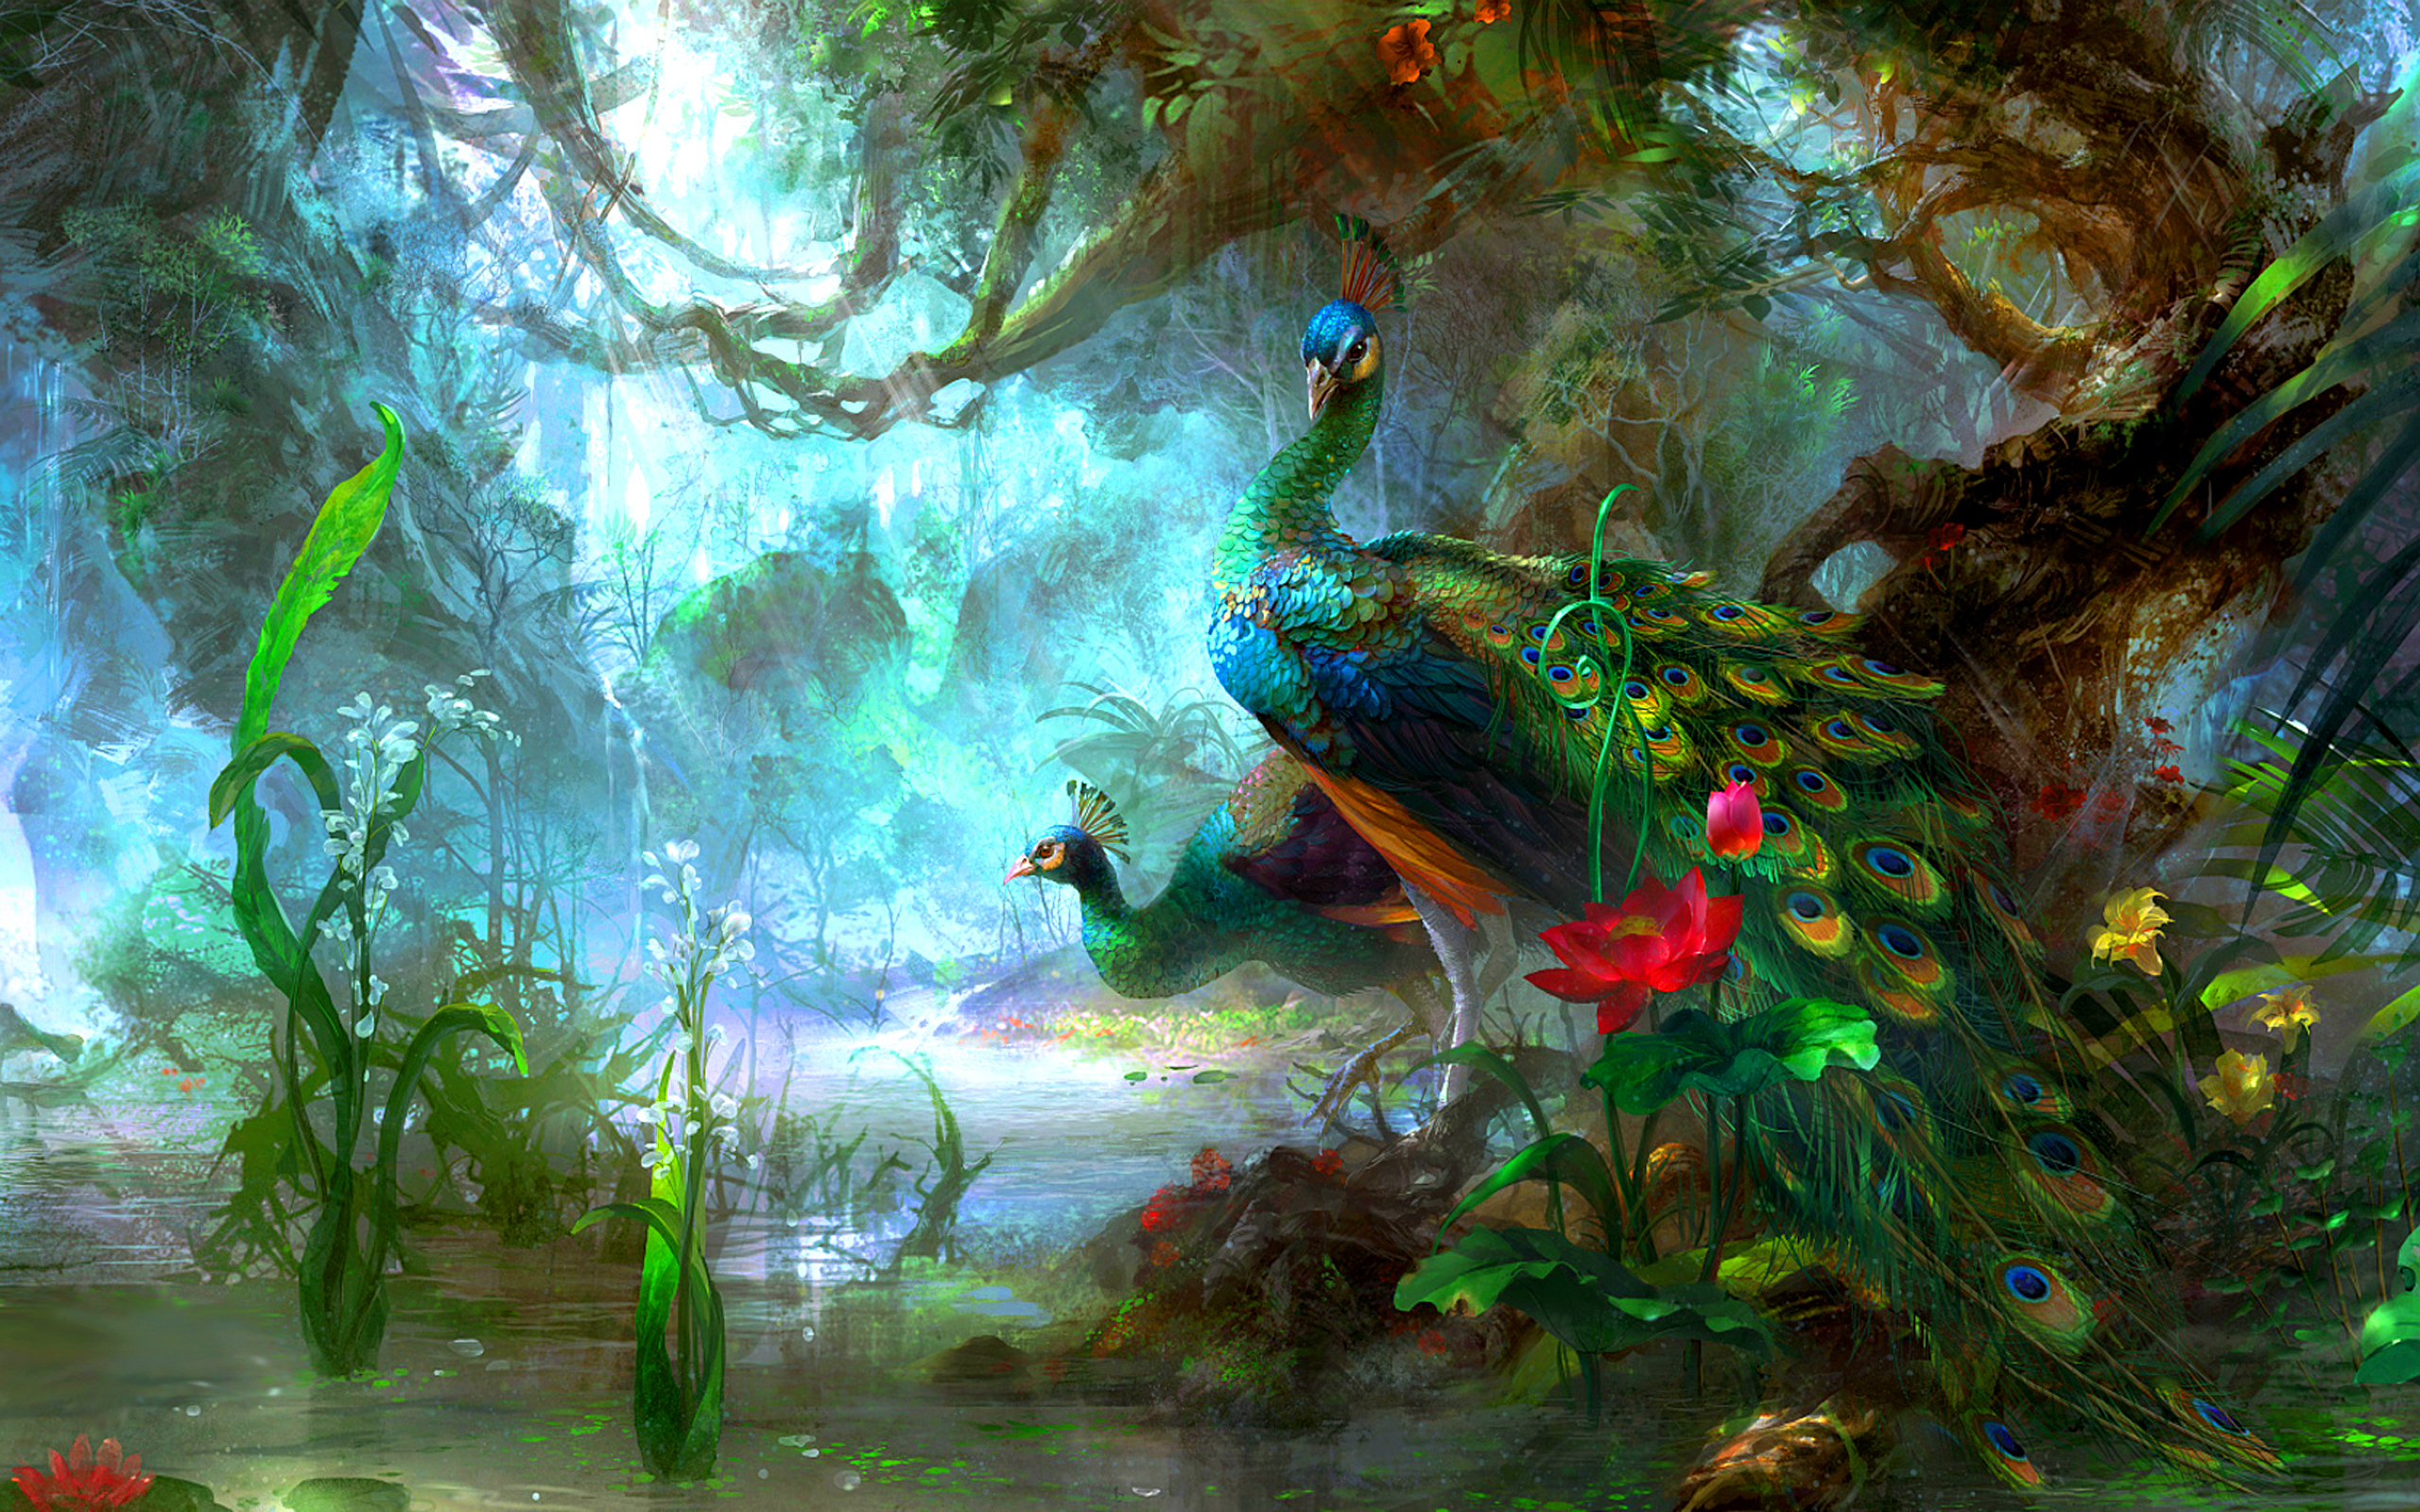 The Peacocks Paradise